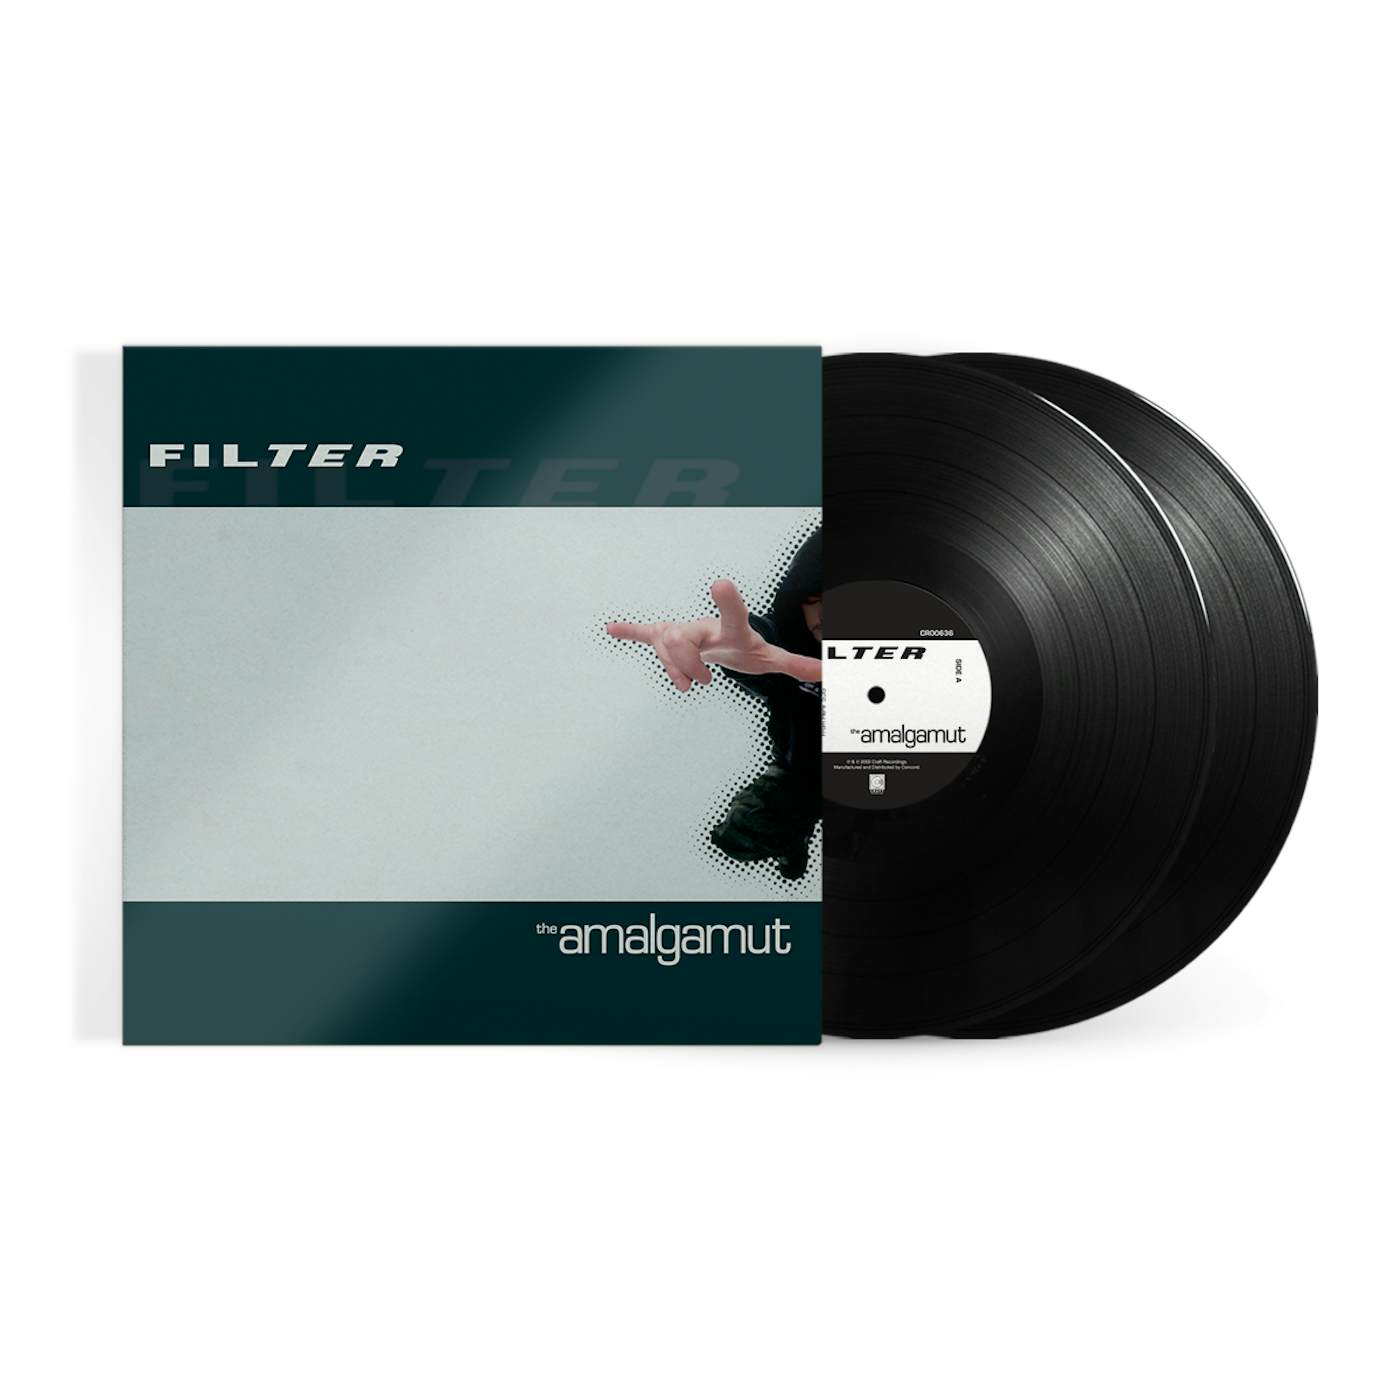 Filter The Amalgamut - 20th Anniversary Edition (2-LP) (Vinyl)